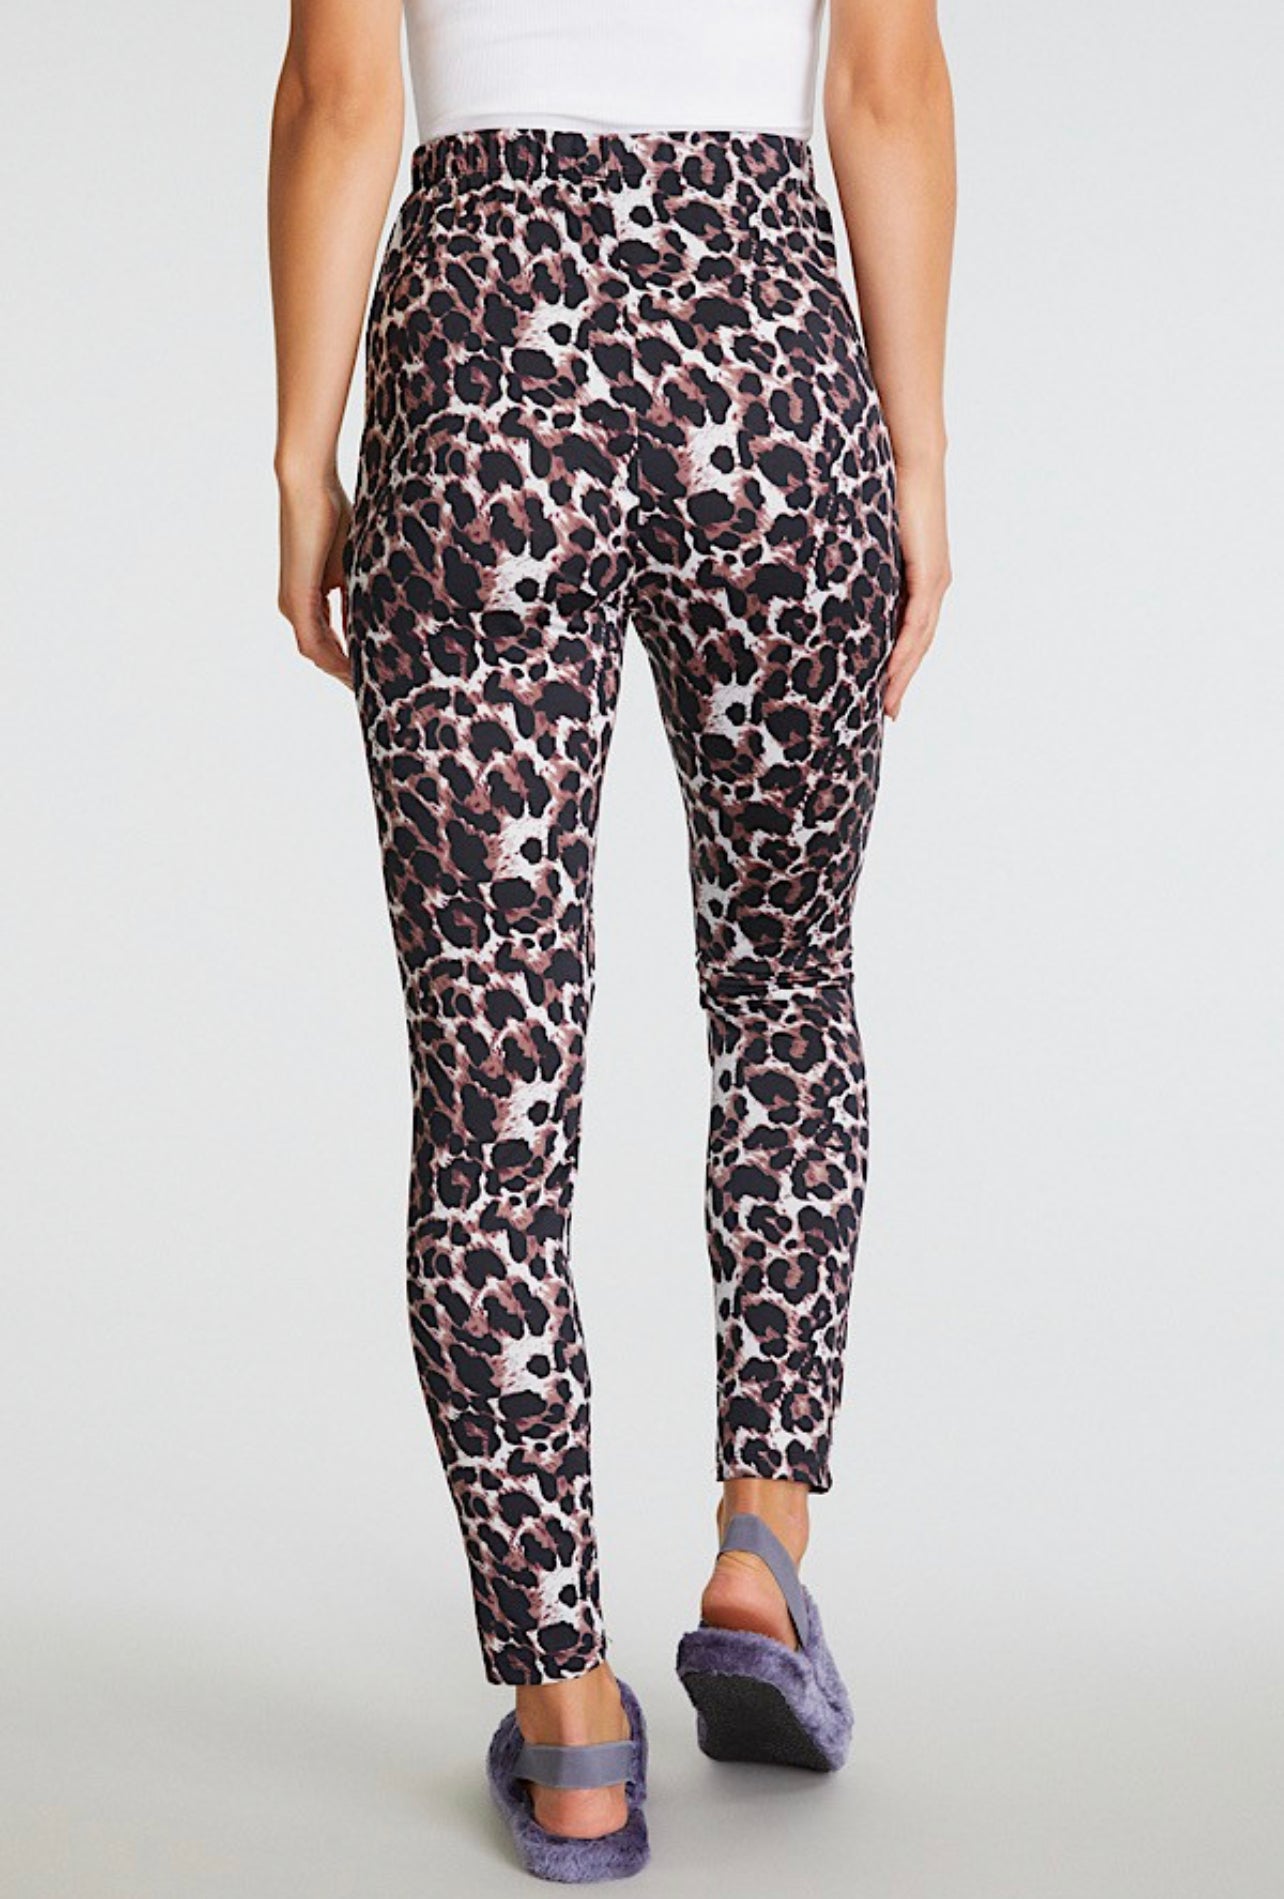 No Boundaries Women cheetah love leggings size medium - $6